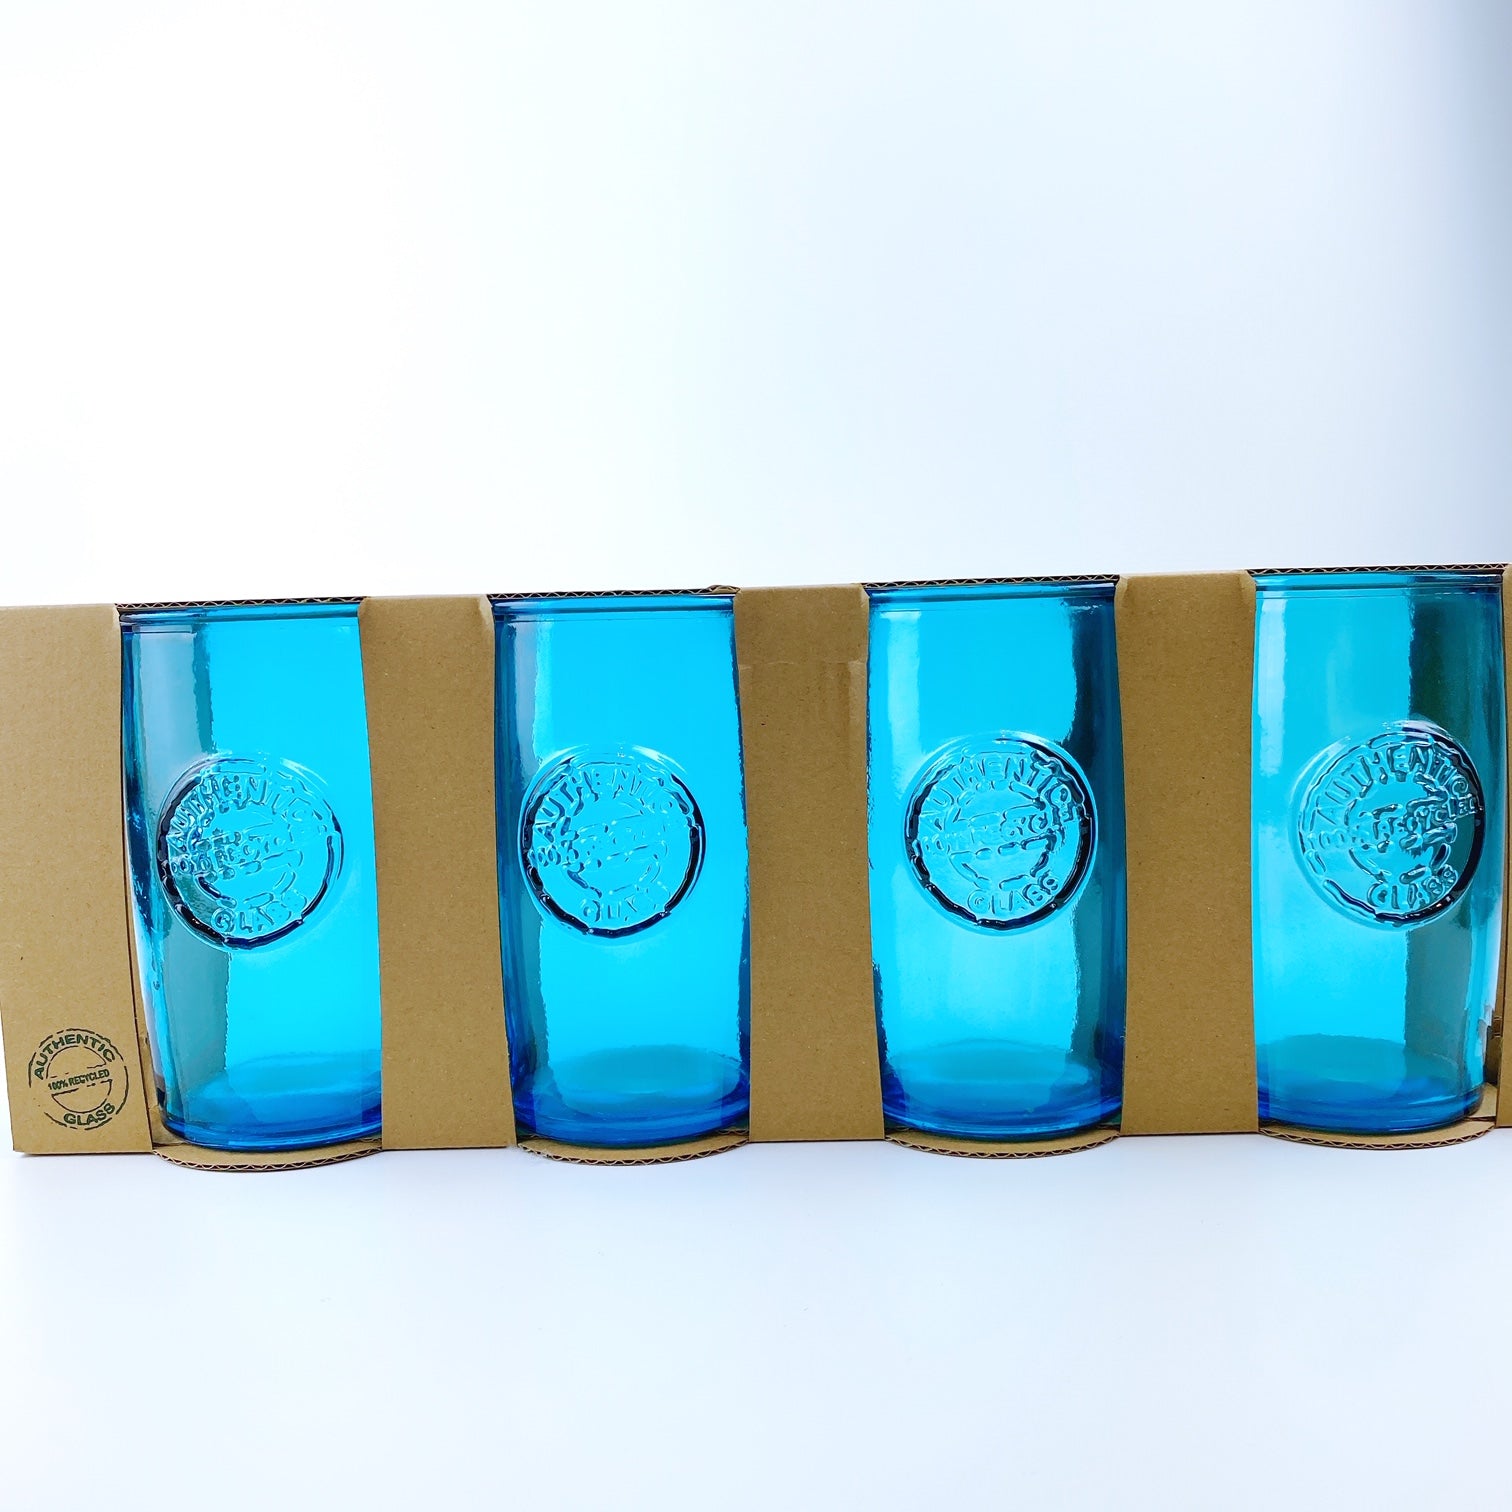 Aqua Recycled Glass Tumbler (16 oz) - KESTREL